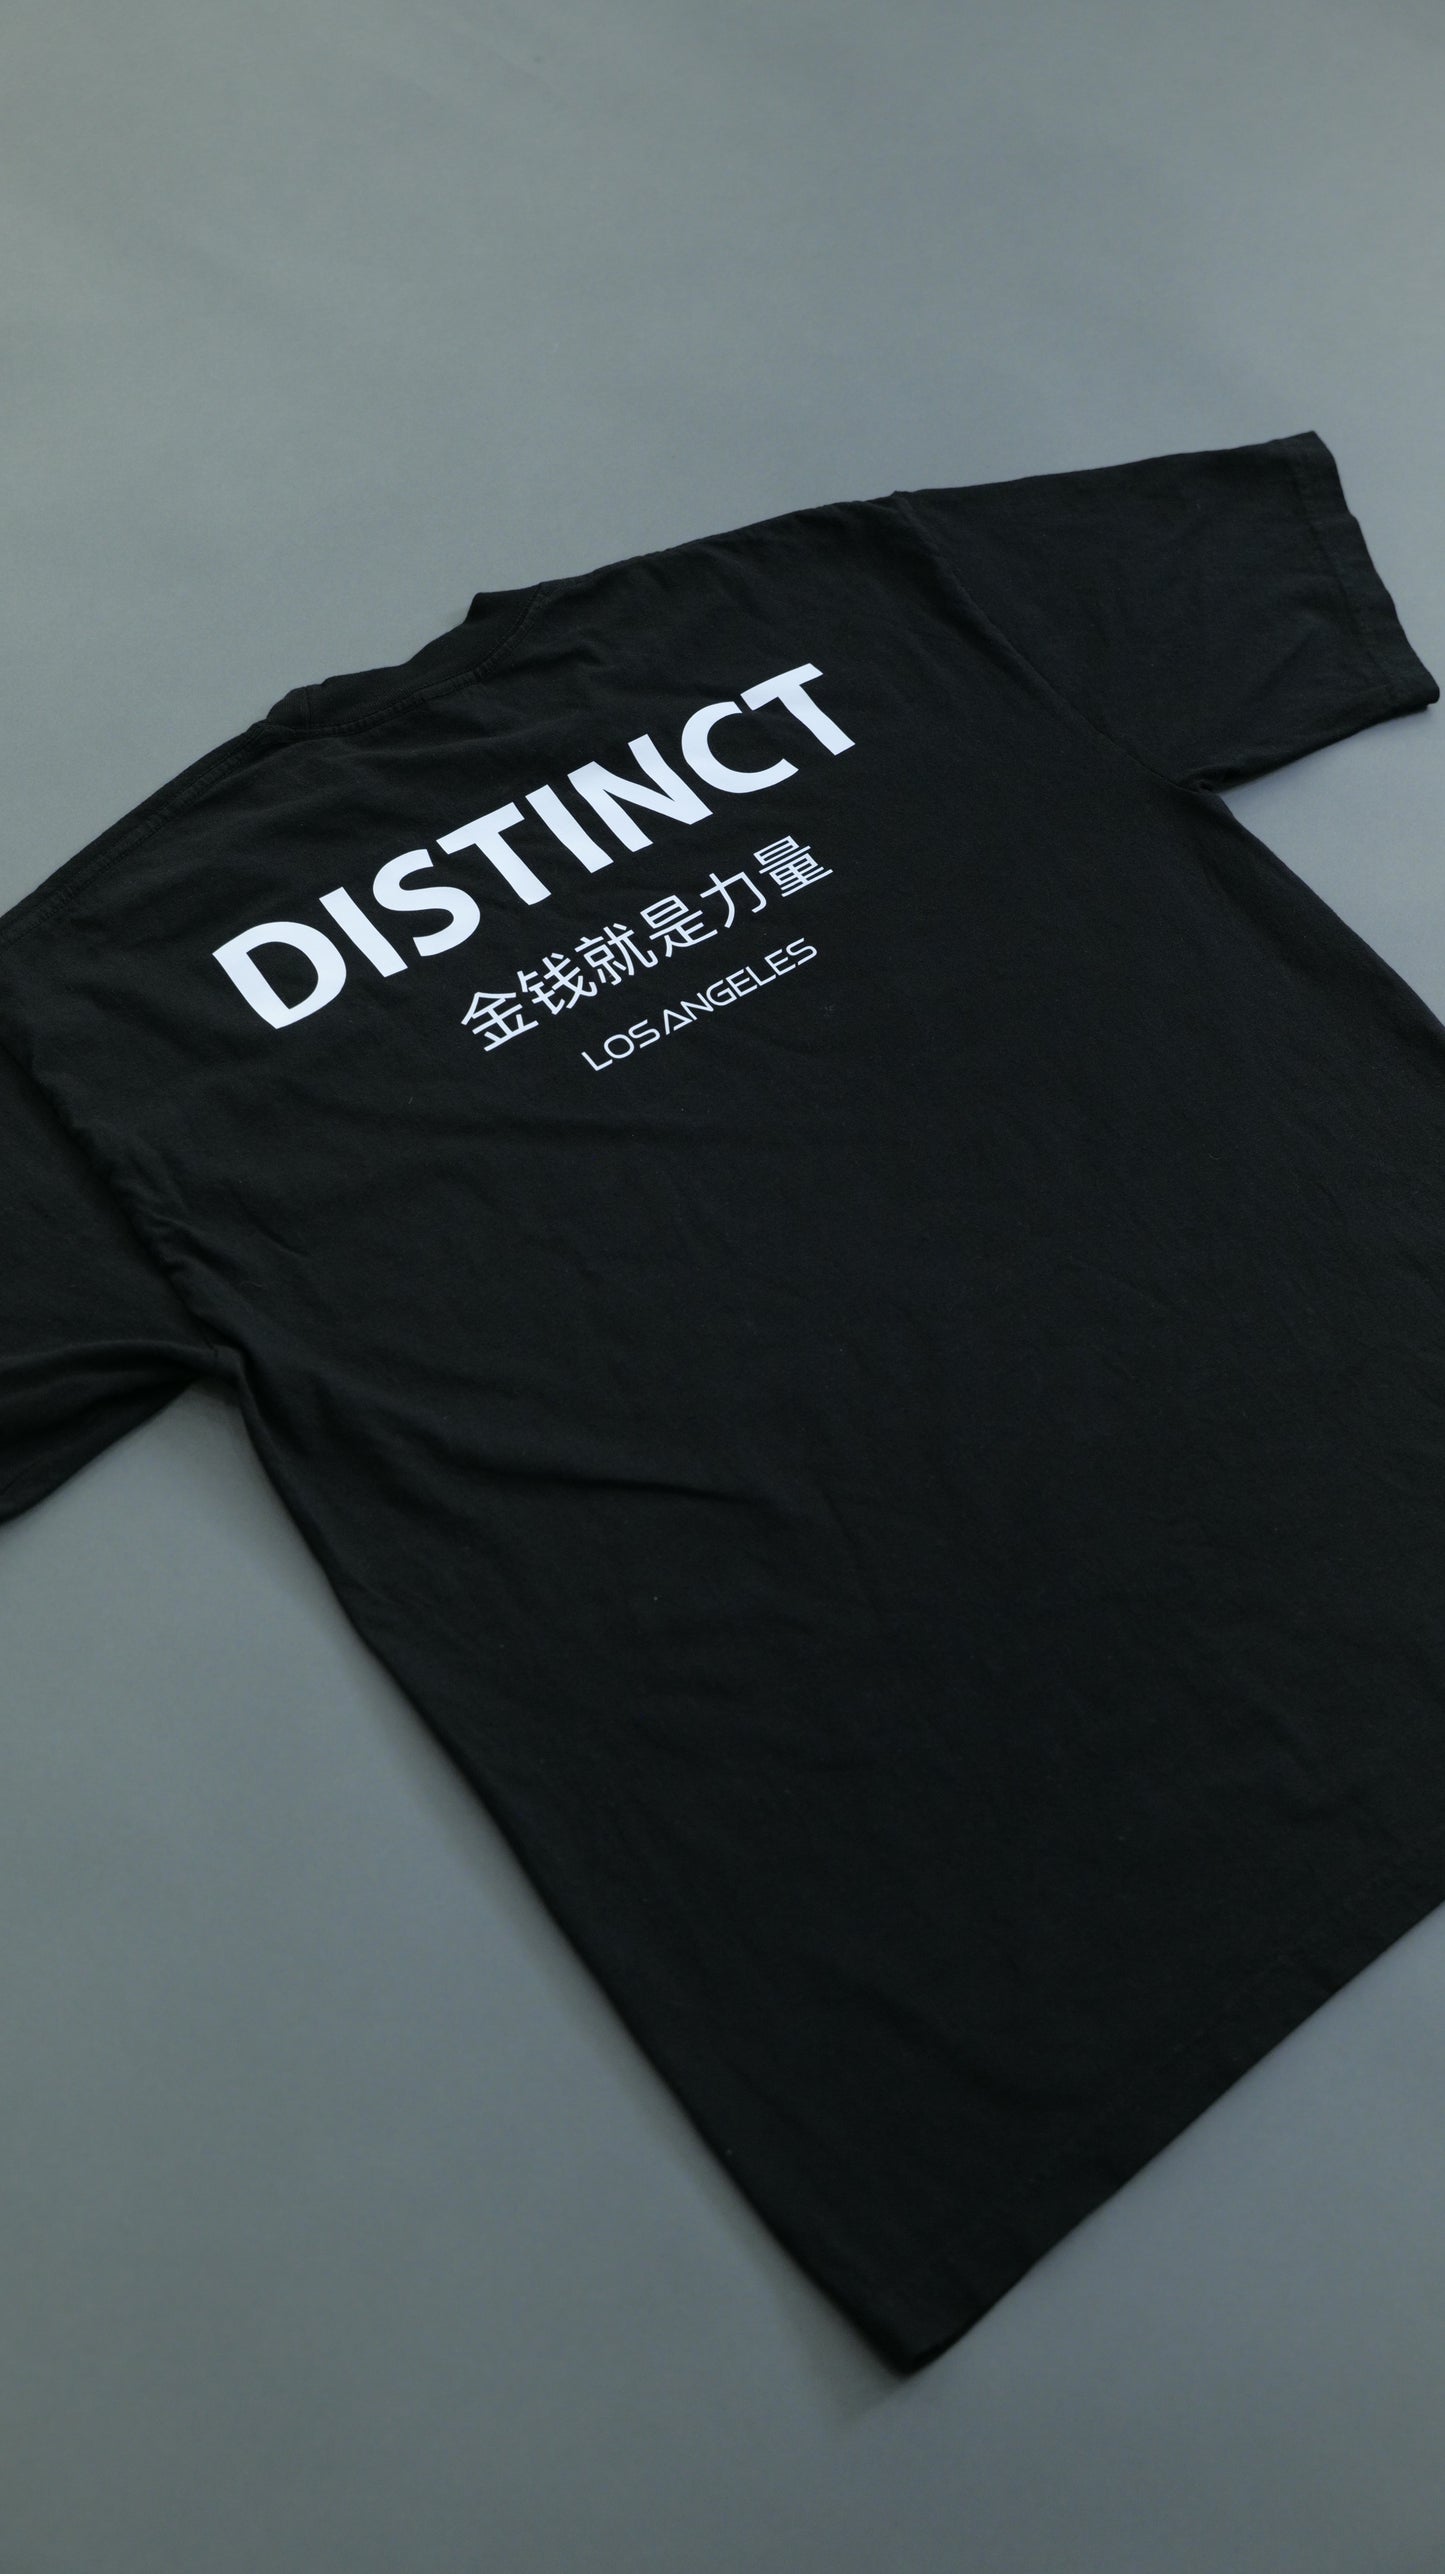 Black DISTINCT T-Shirt